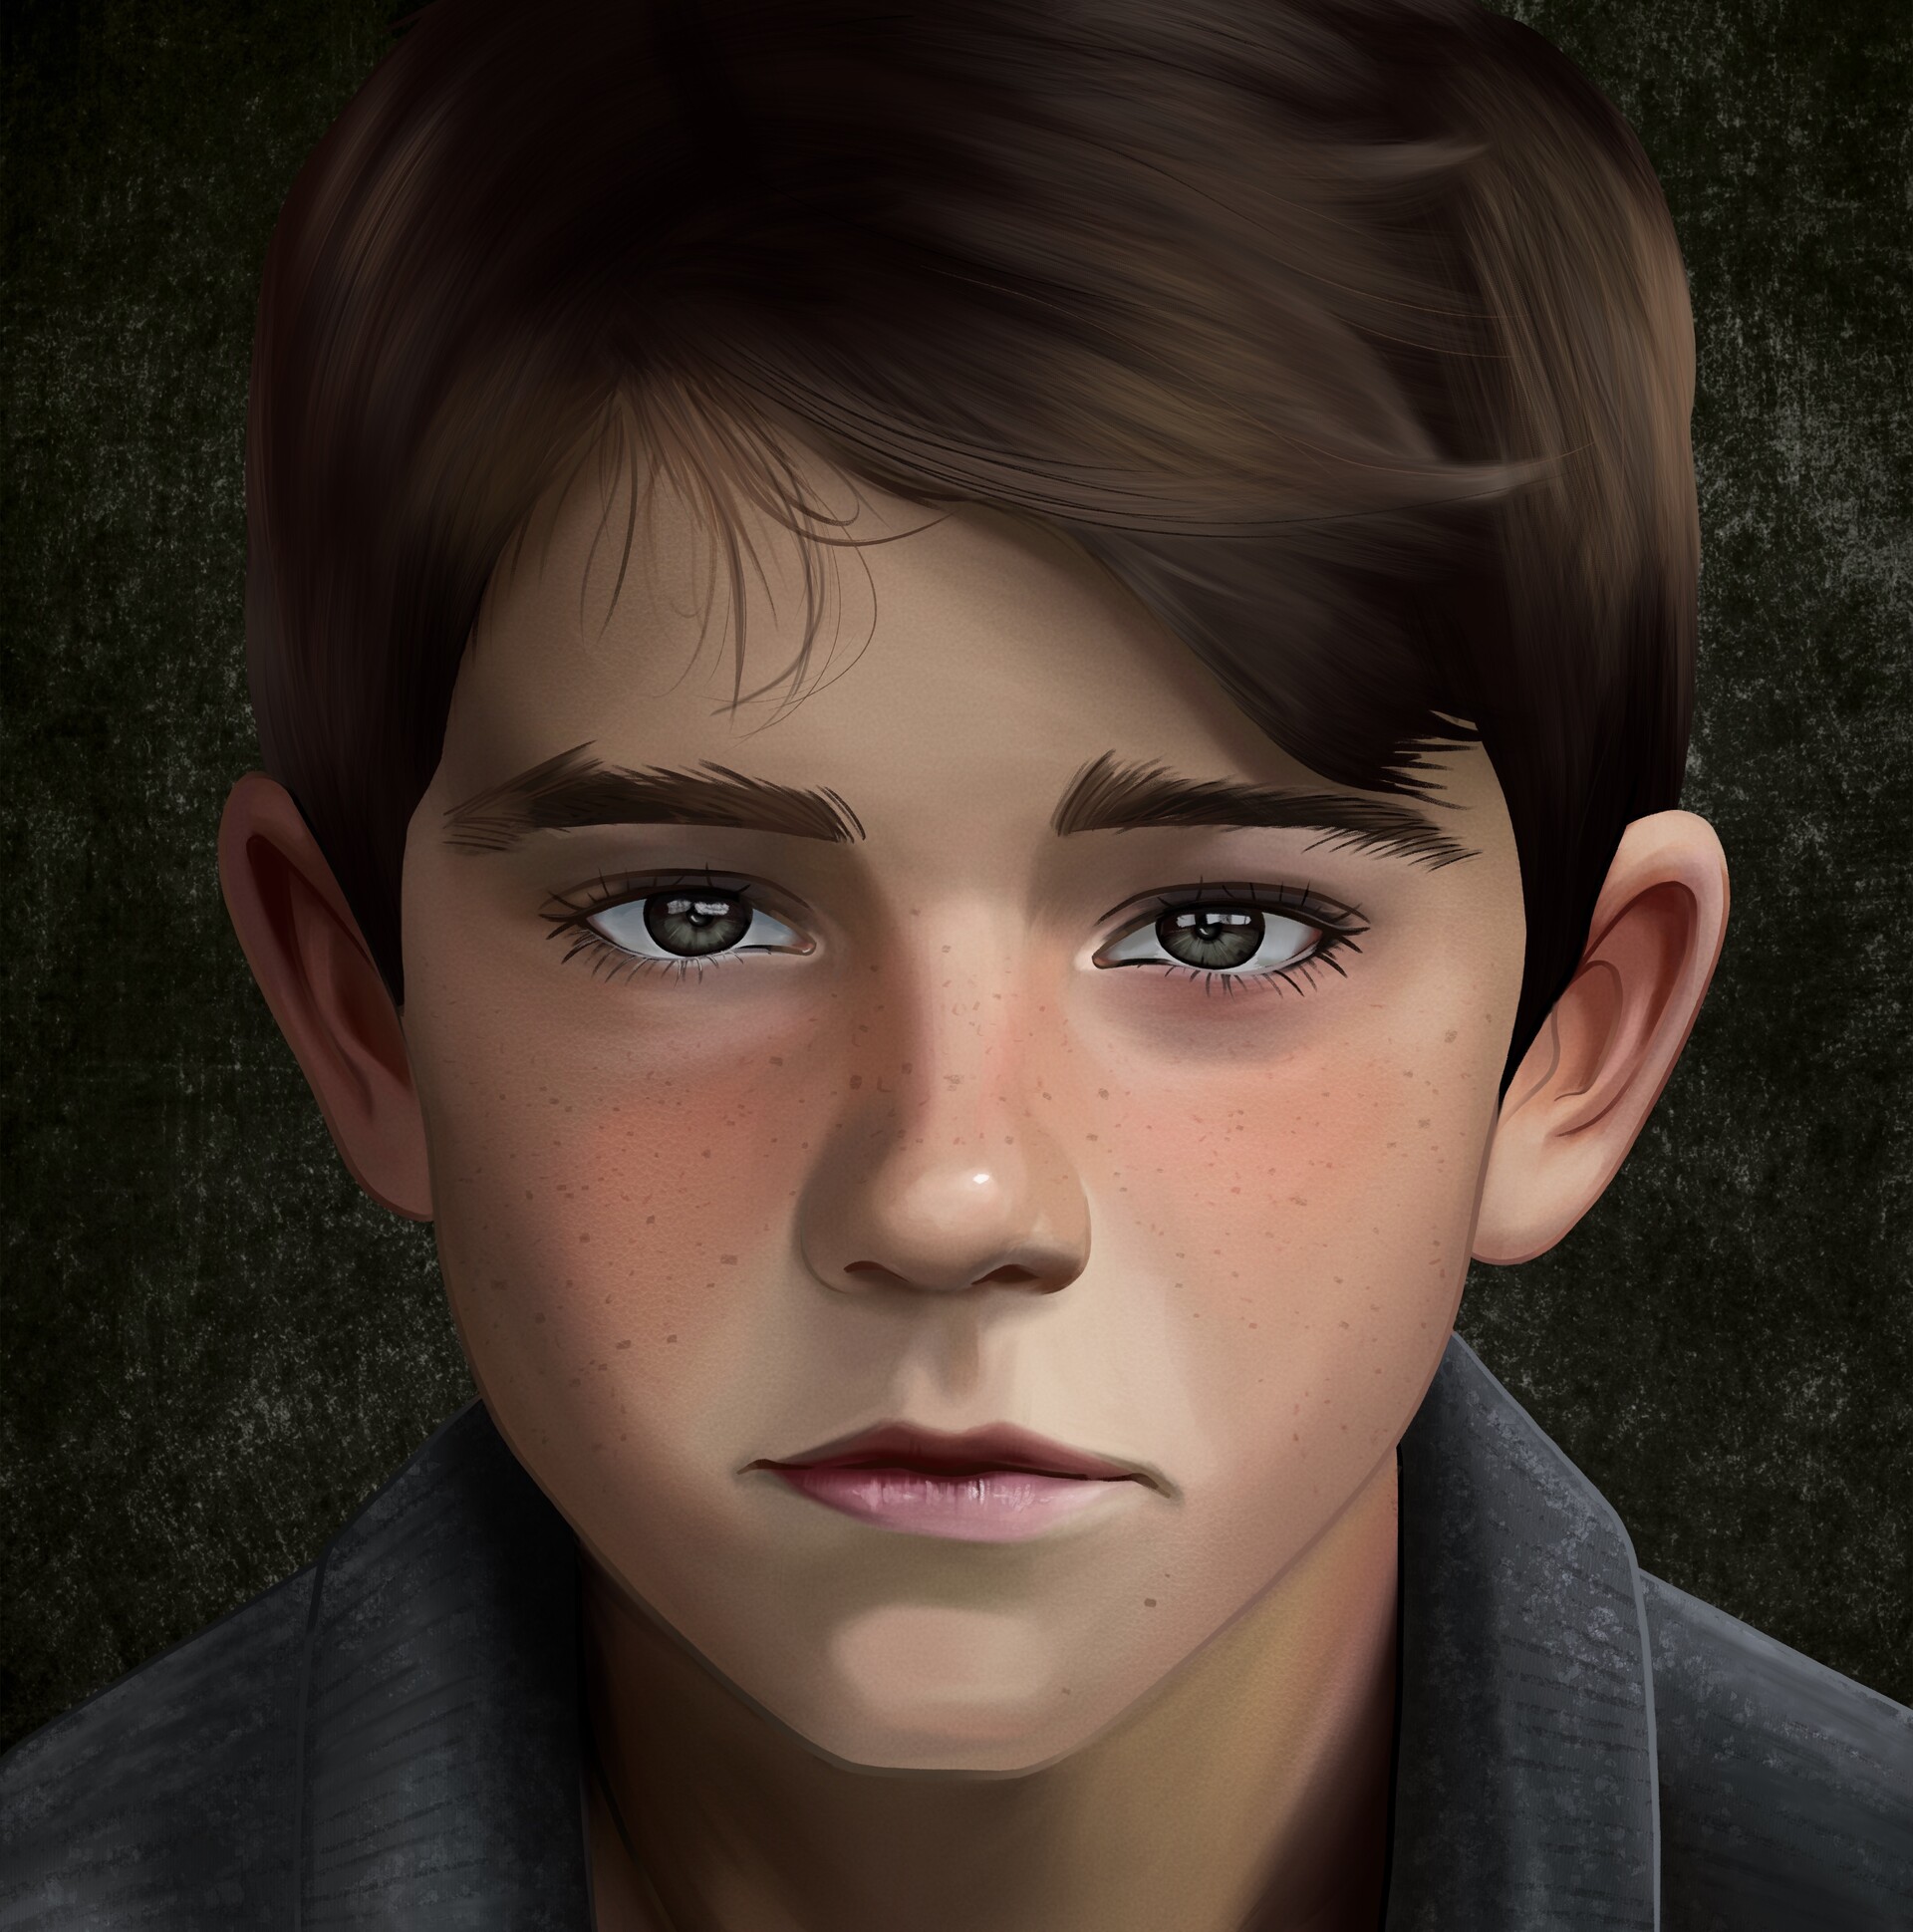 ArtStation - Illustration young boy character